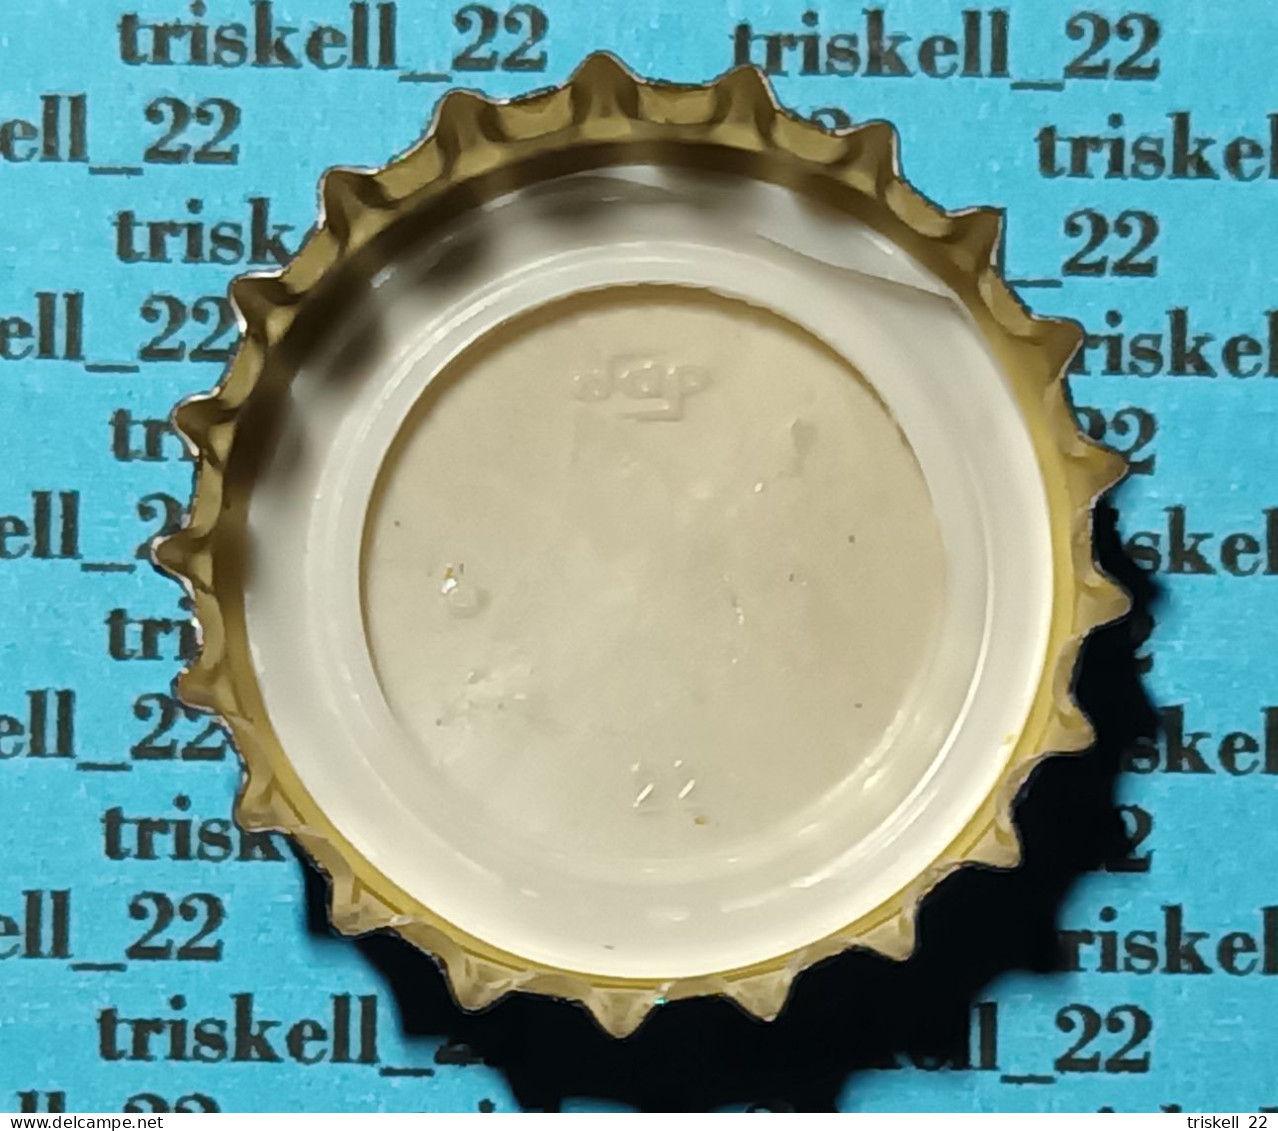 Birra Baladin   Lot N° 38 - Bière